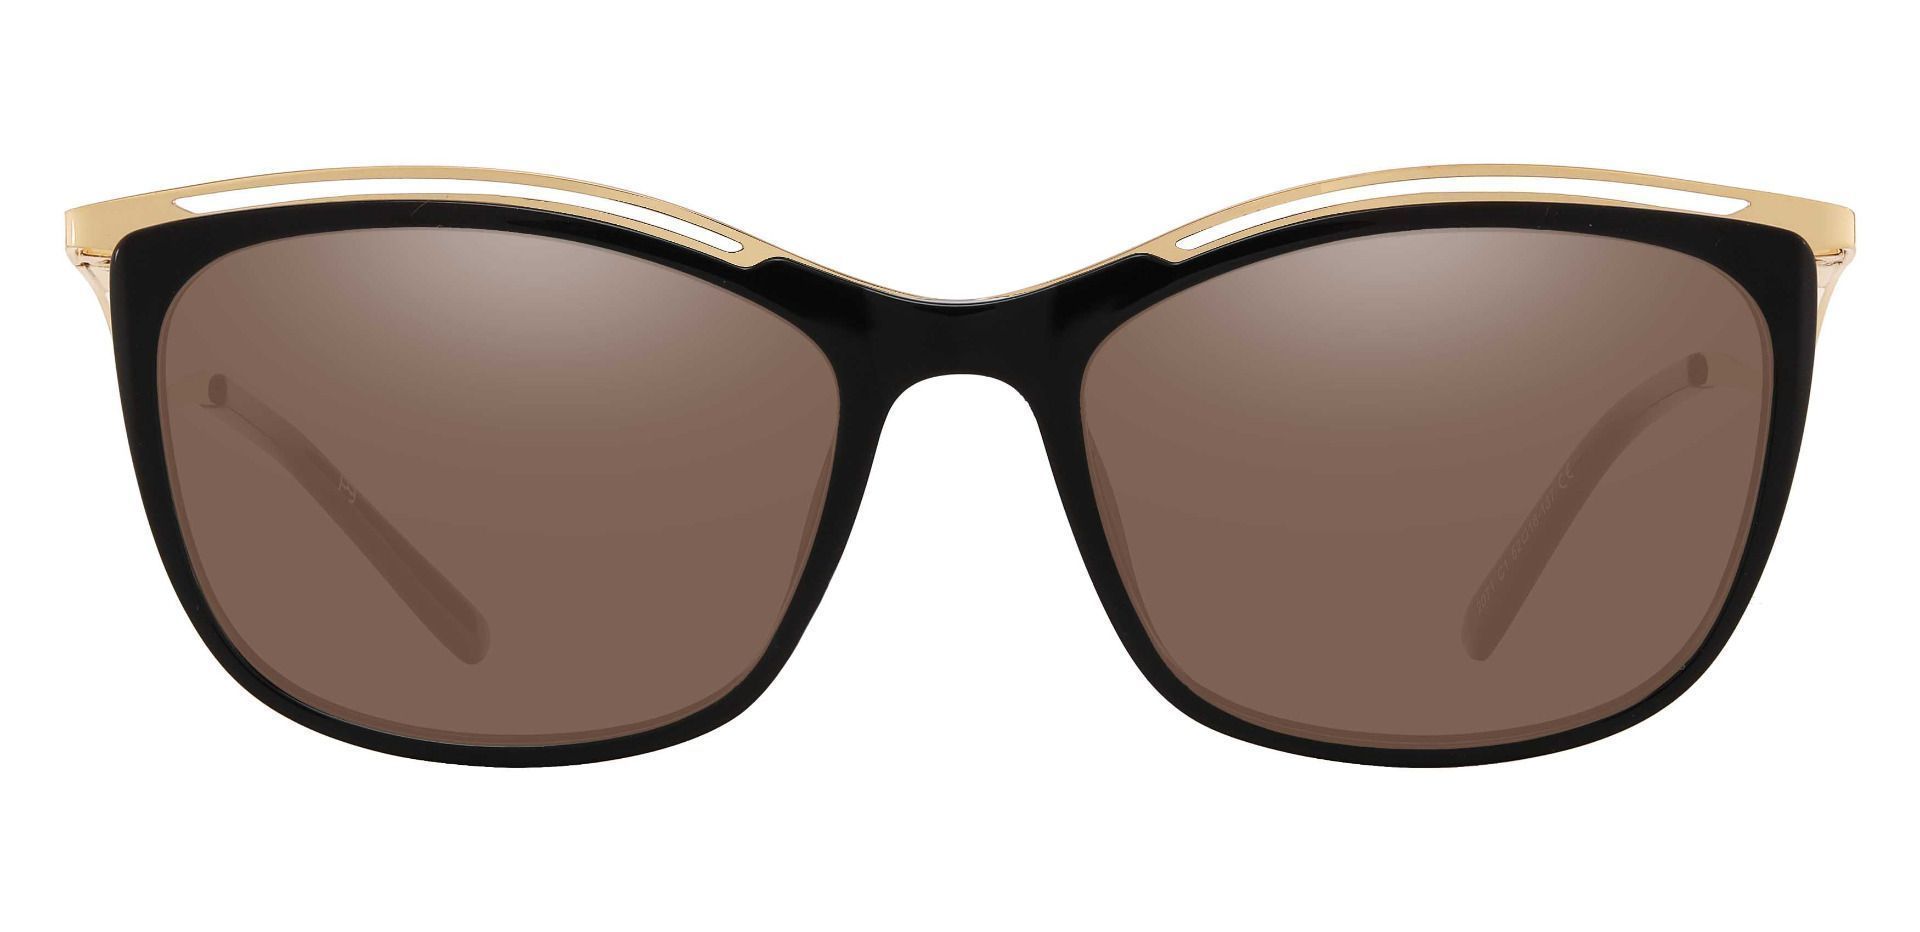 Enola Cat Eye Prescription Sunglasses - Black Frame With Brown Lenses